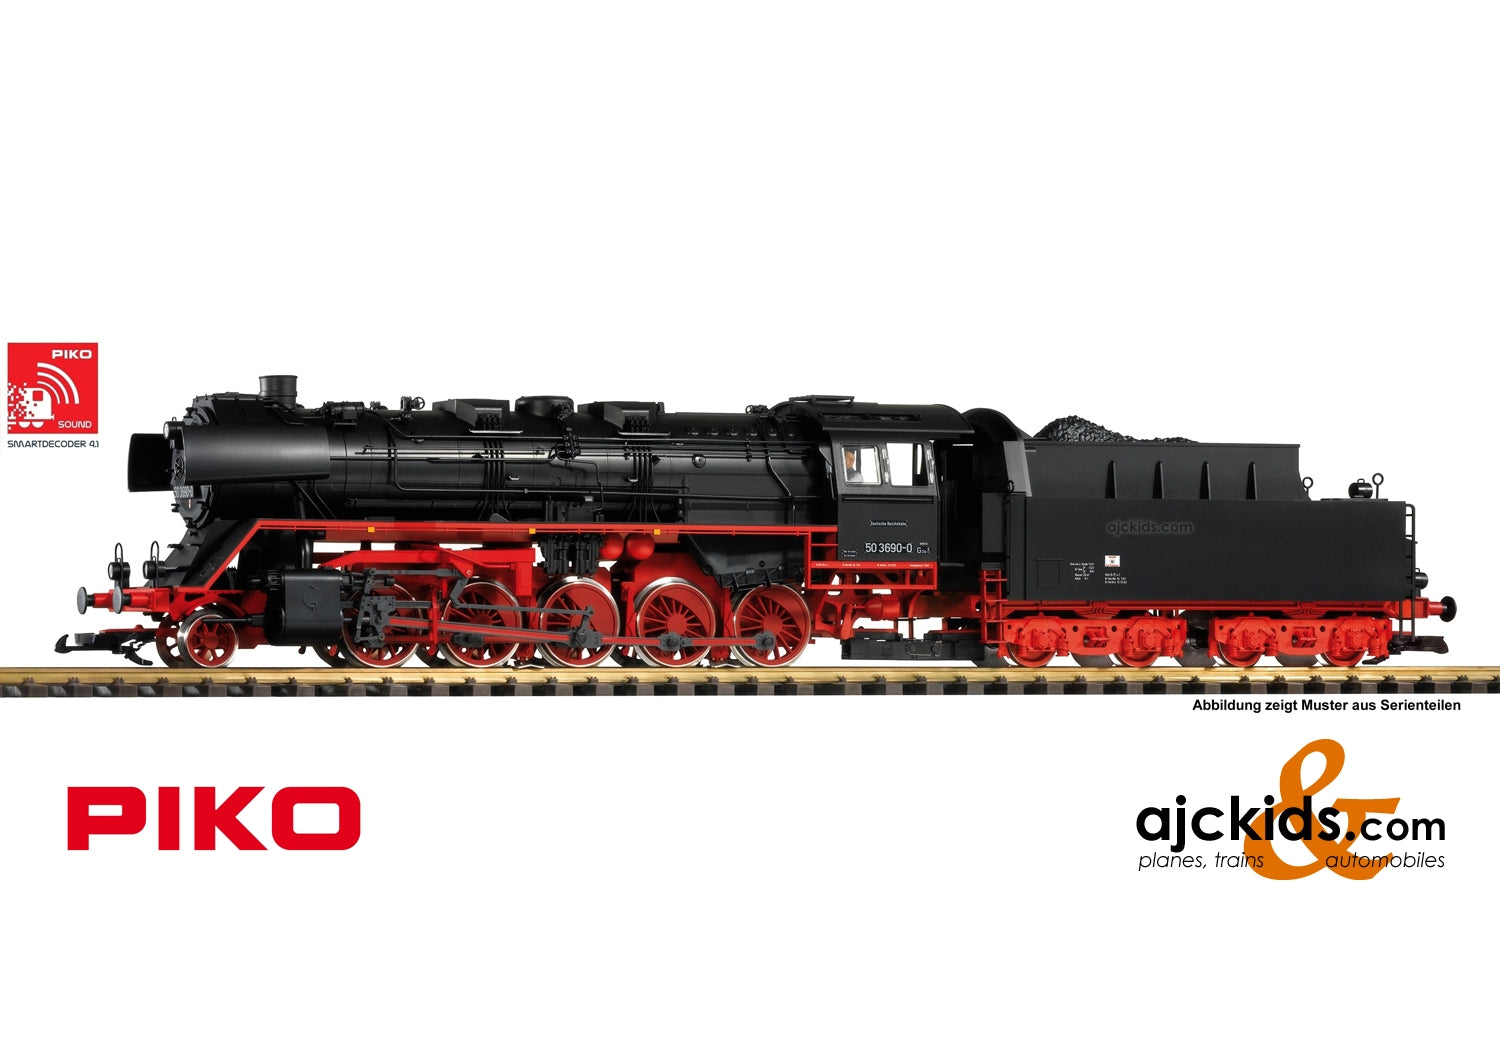 Piko G-Scale Locomotives – Ajckids